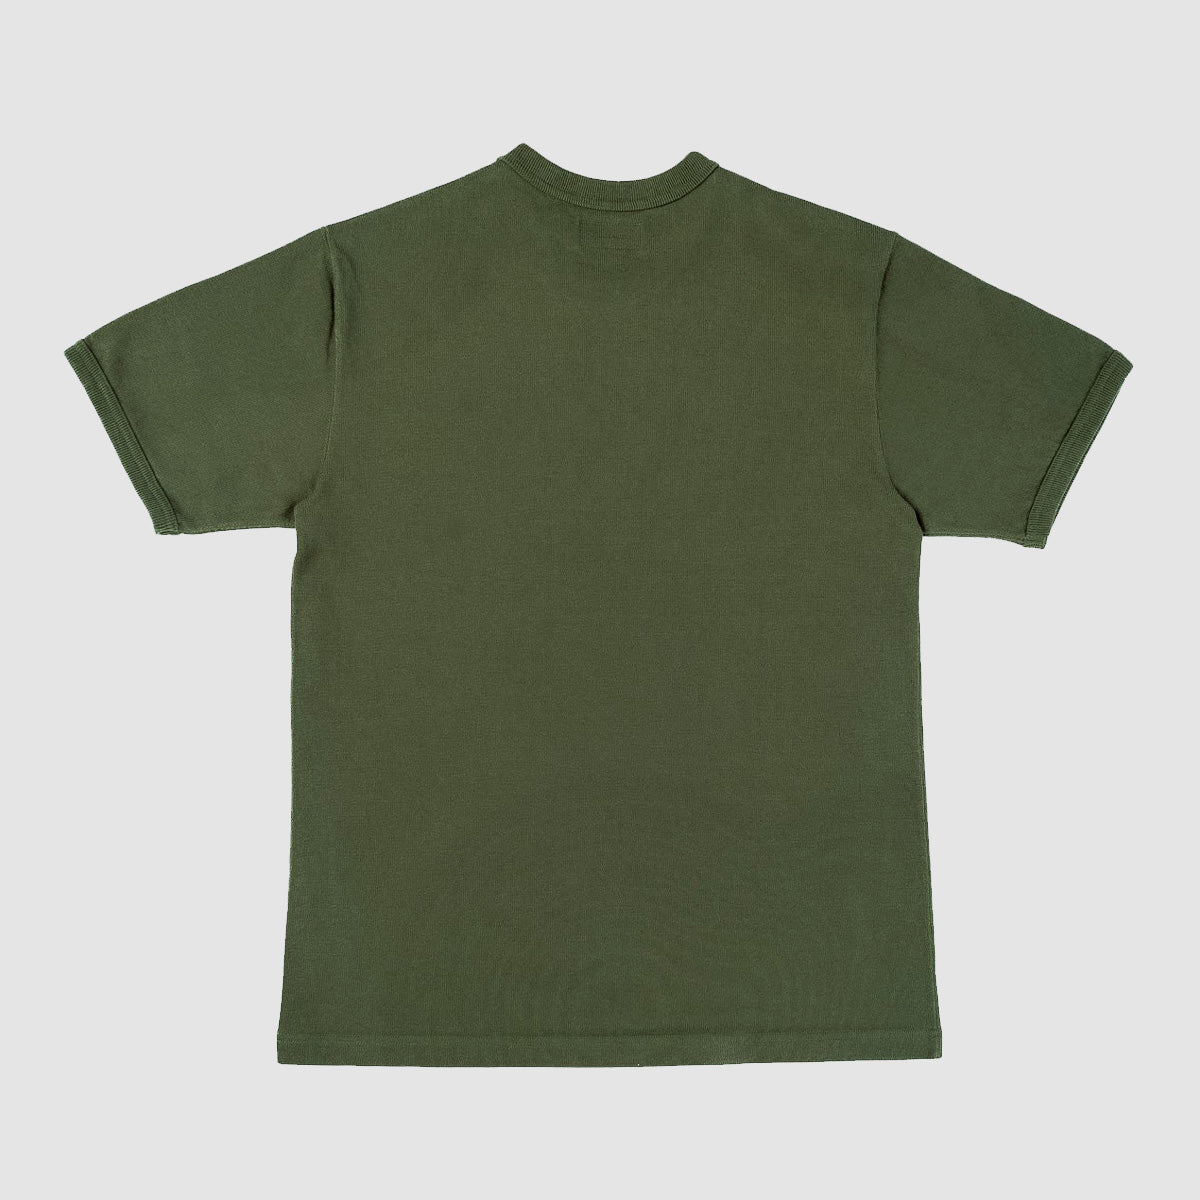 11oz Cotton Knit Crew Neck Short Sleeved T-Shirt - Olive